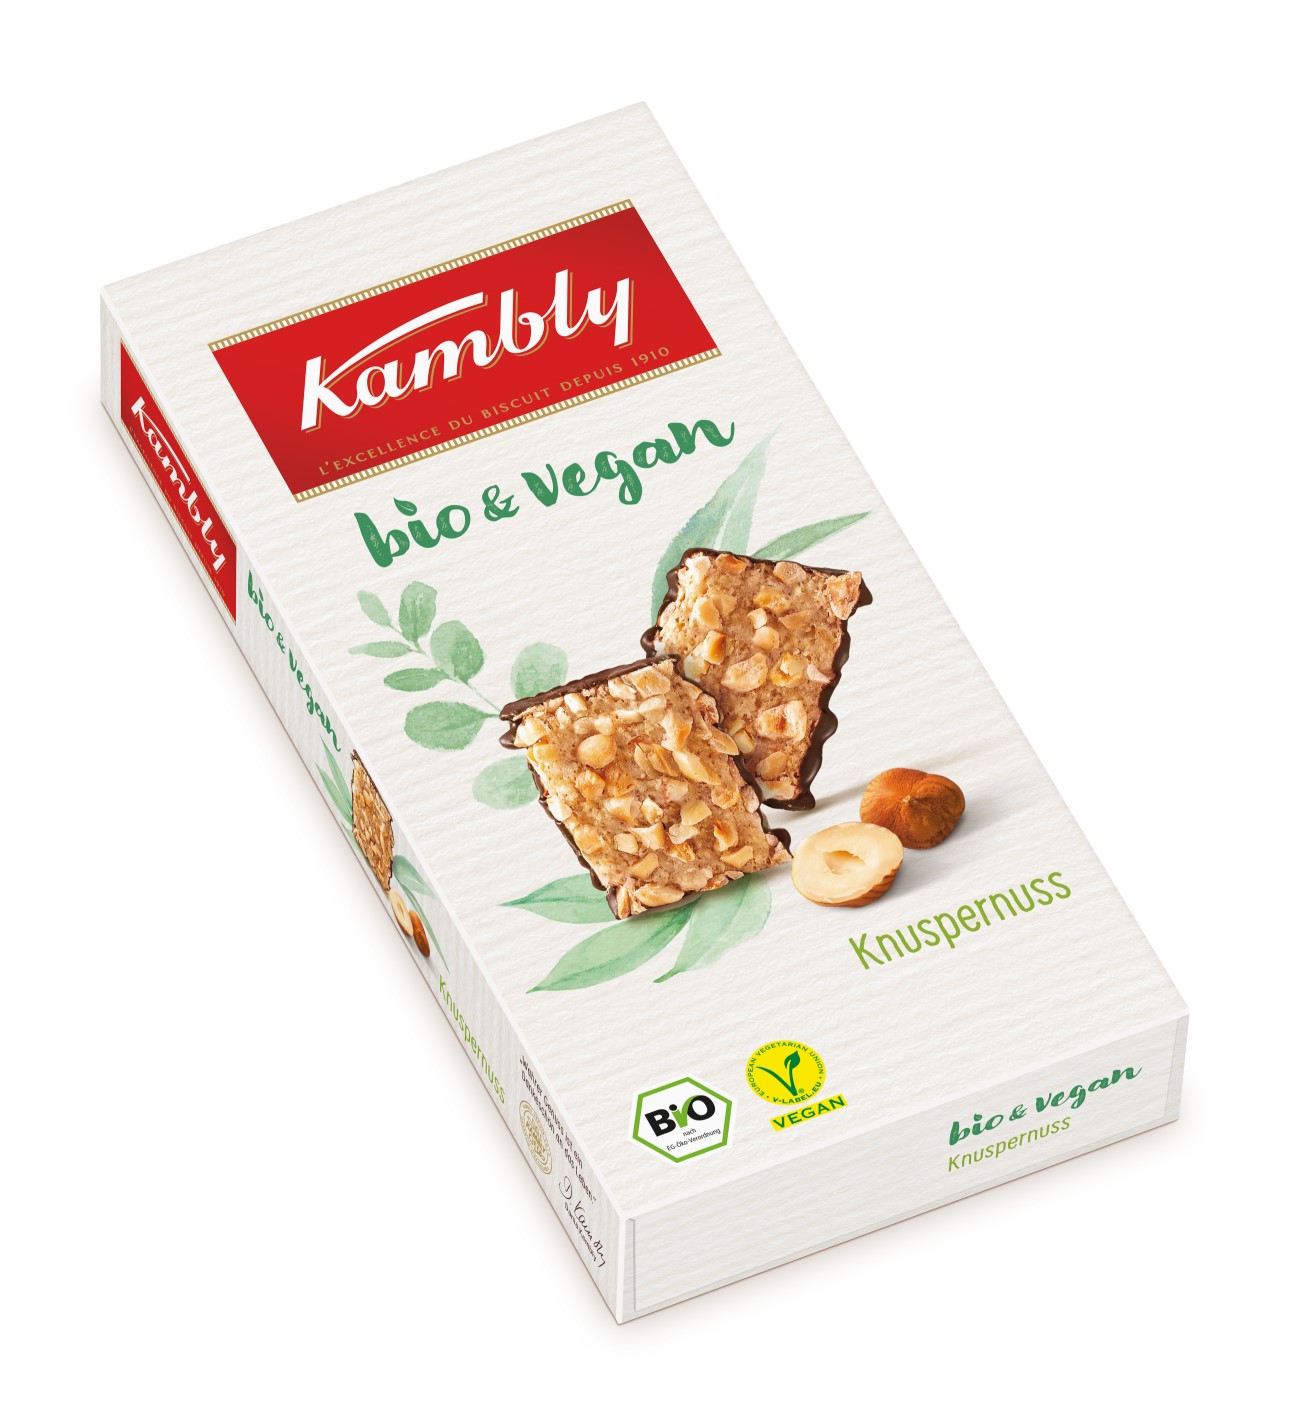 Kambly bio&vegan, Knuspernuss 95g